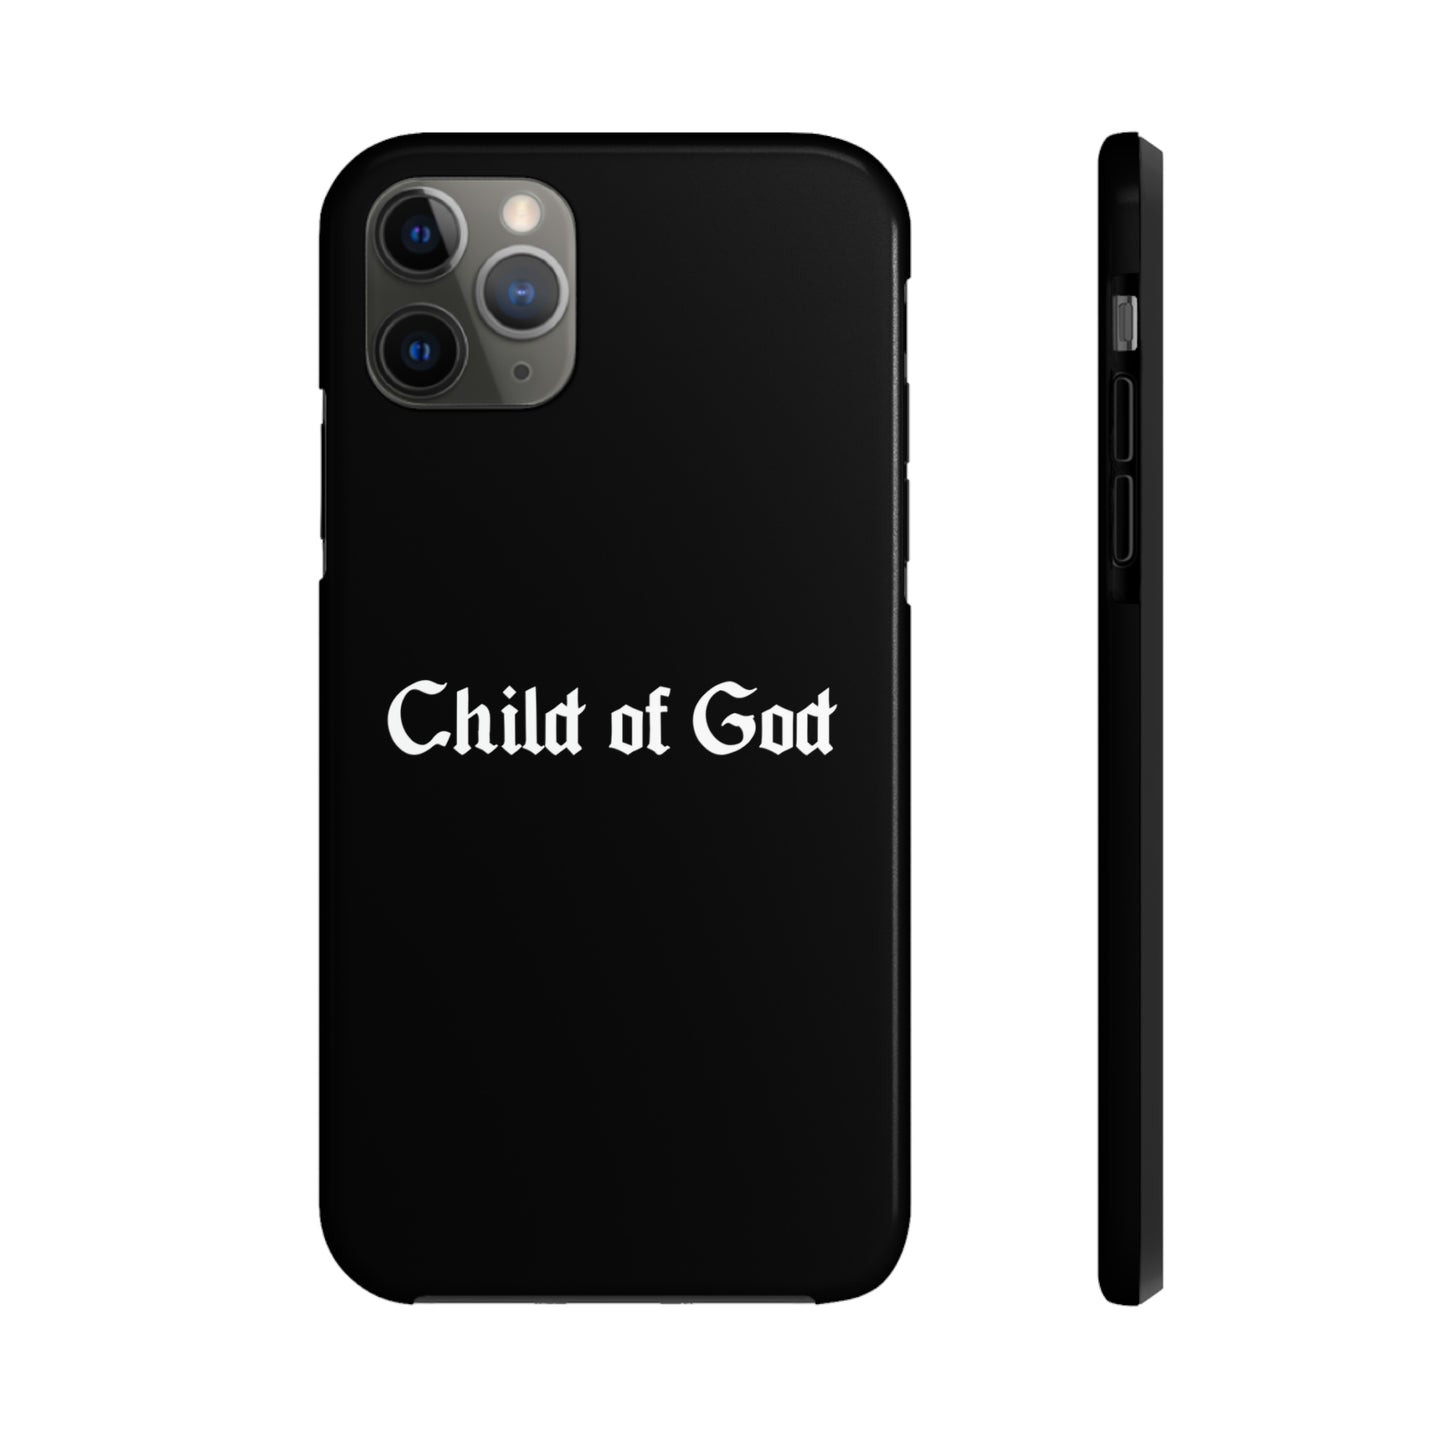 Child of God Case